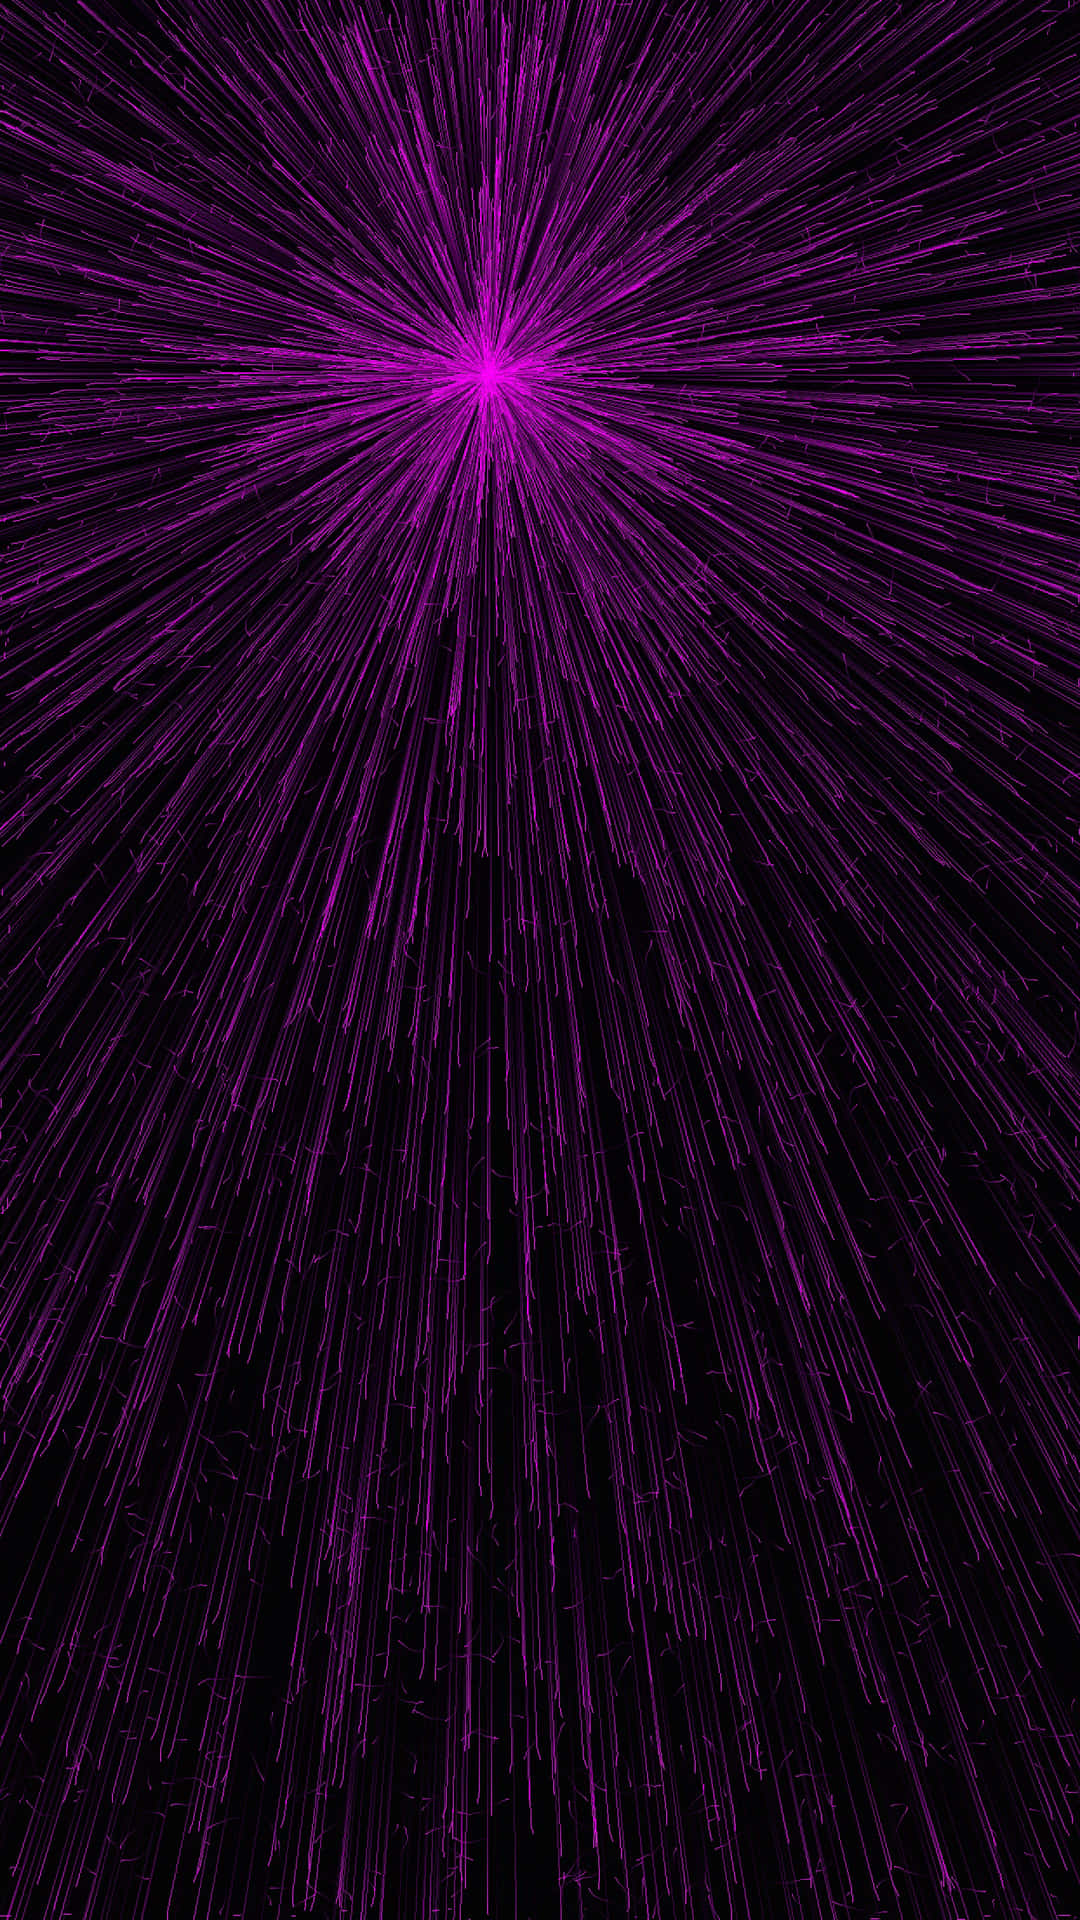 Purple Bursts Of Light On A Black Background